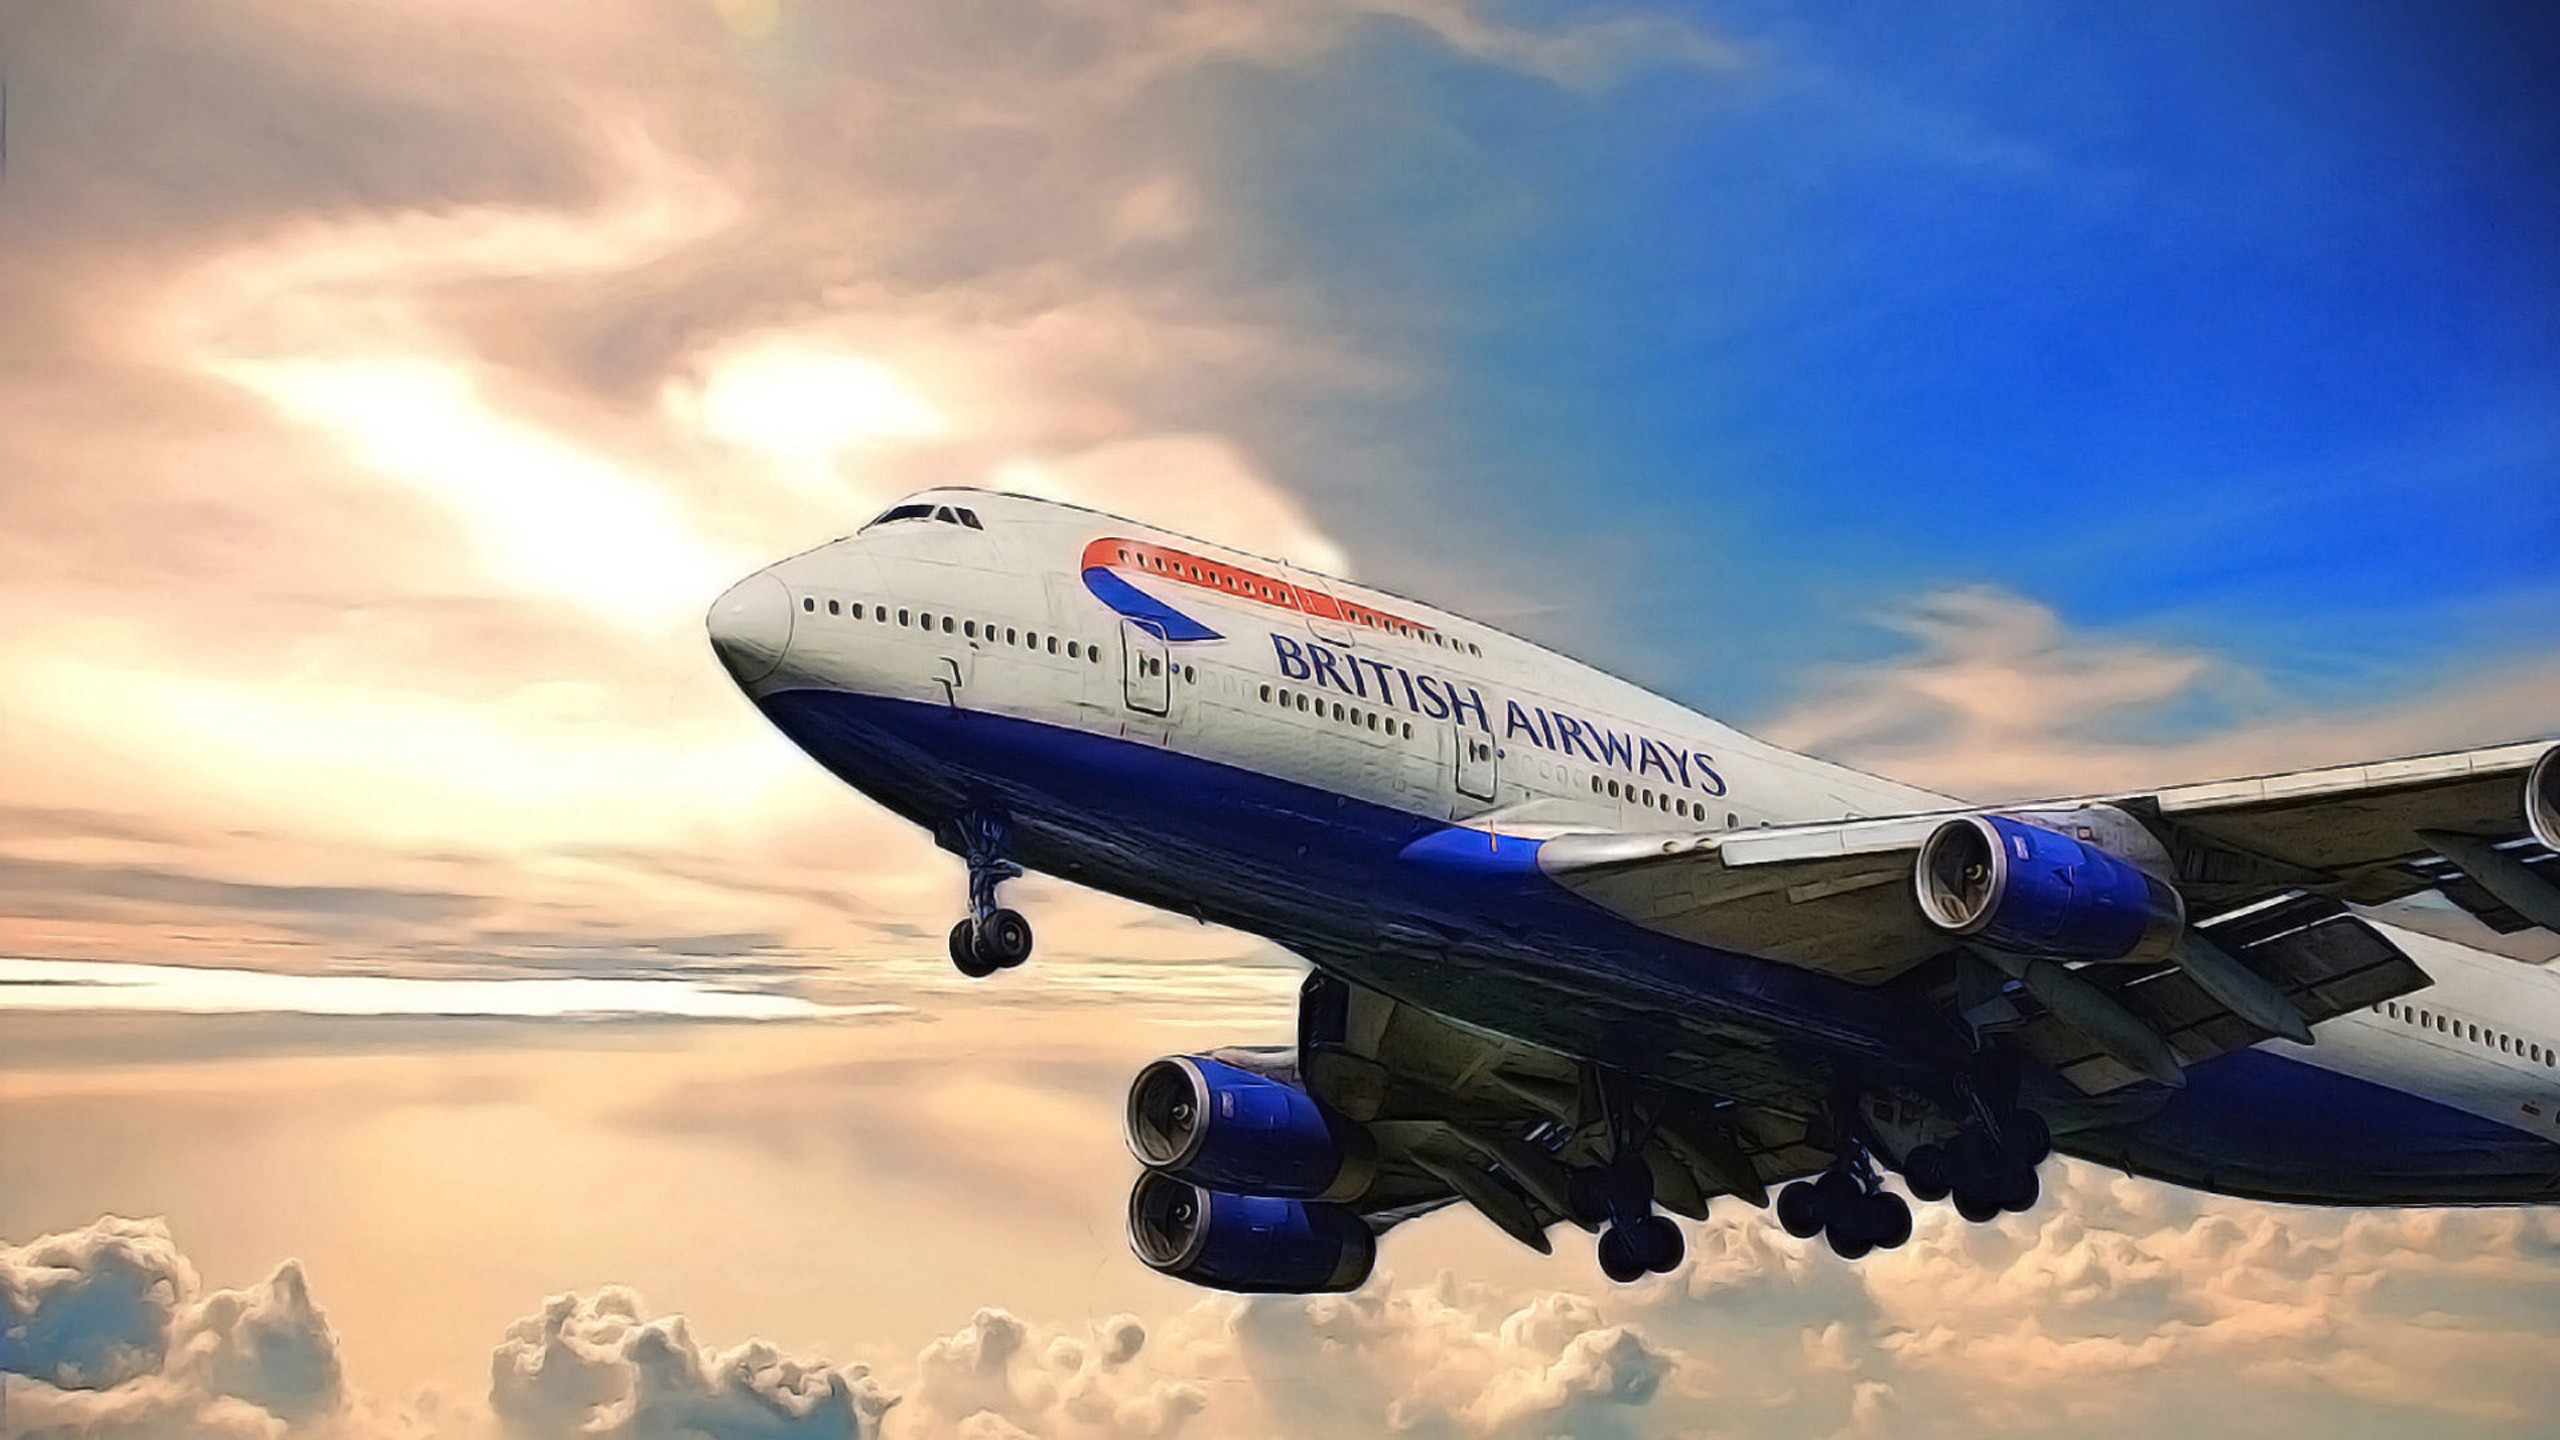 2560x1440 wallpaper.wiki--Boeing-747-Hi-Res-PIC-